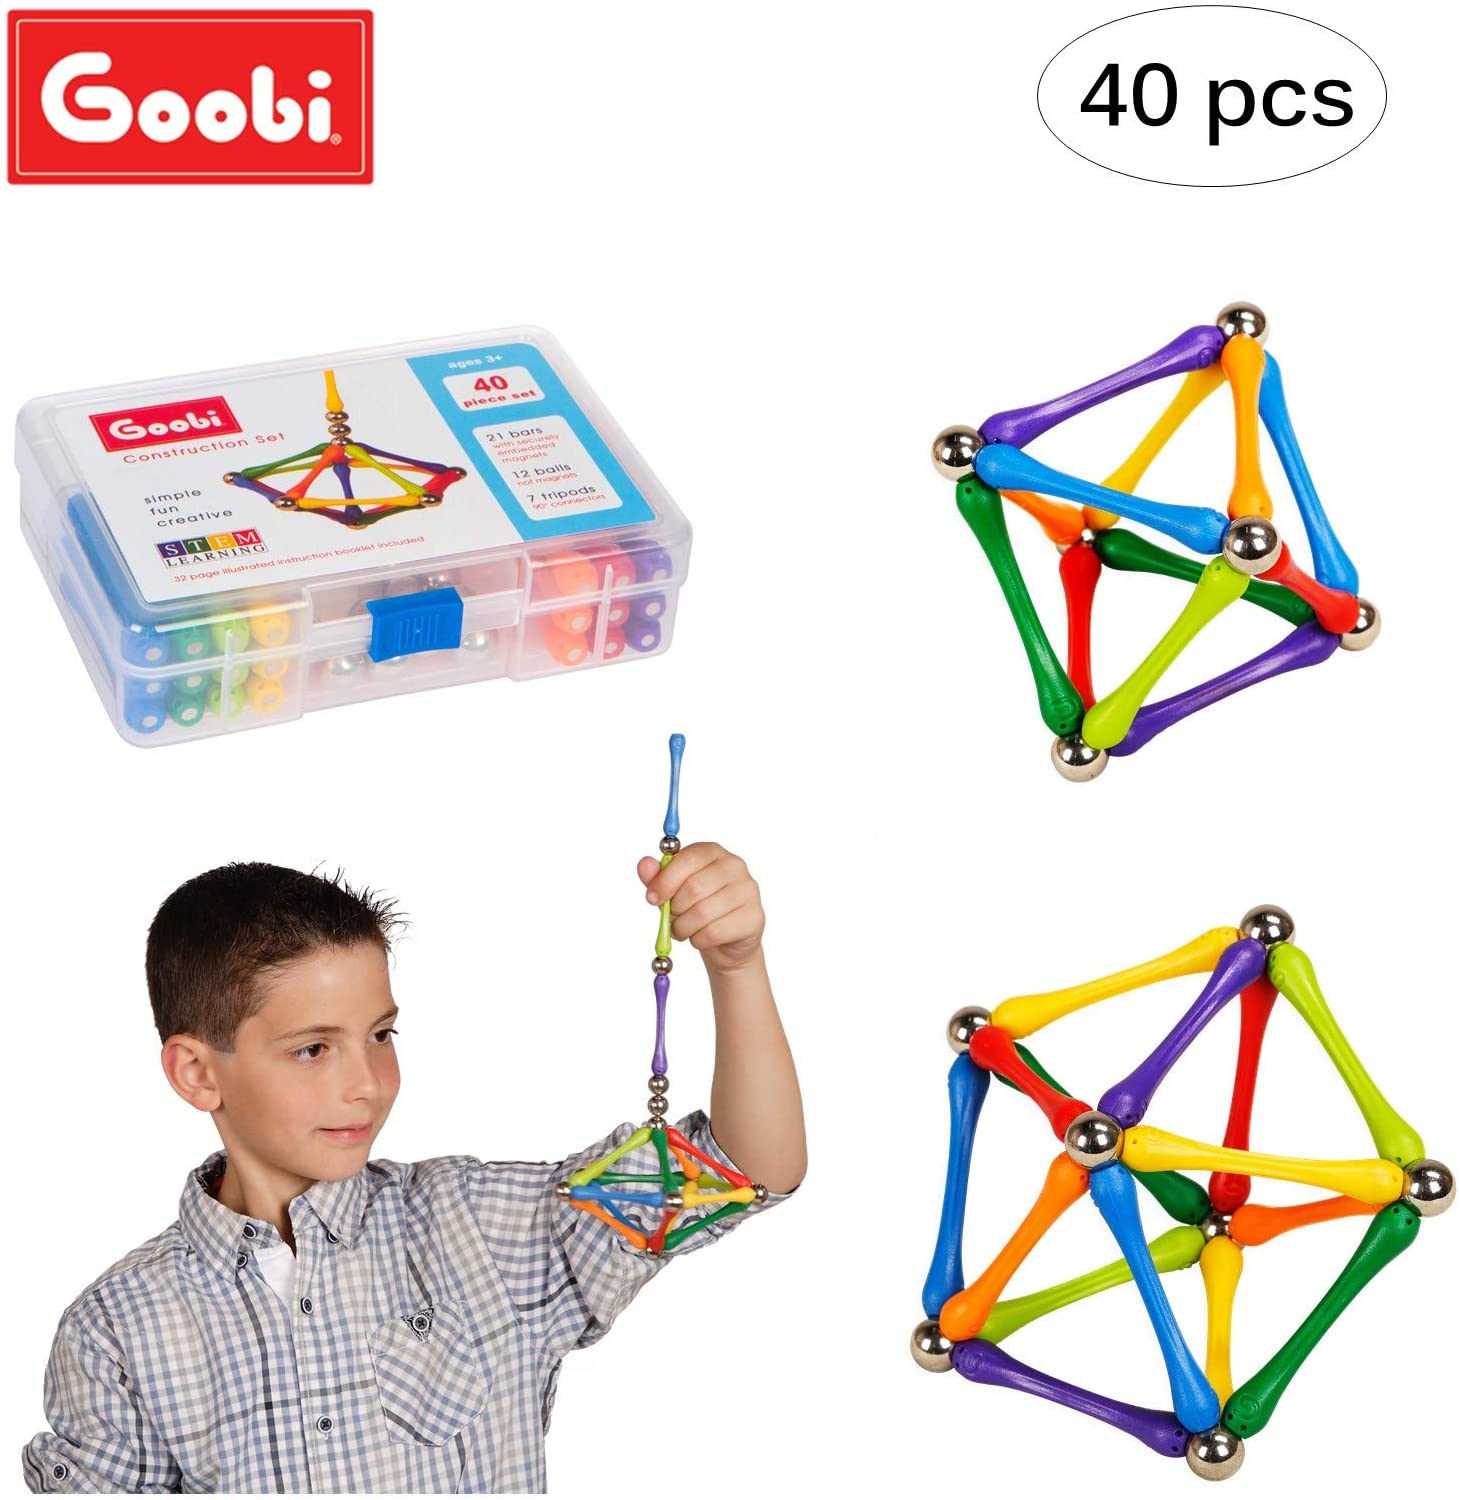 Goobi 40 Piece Construction Set Building Toy Active Play Sticks STEM Learni...